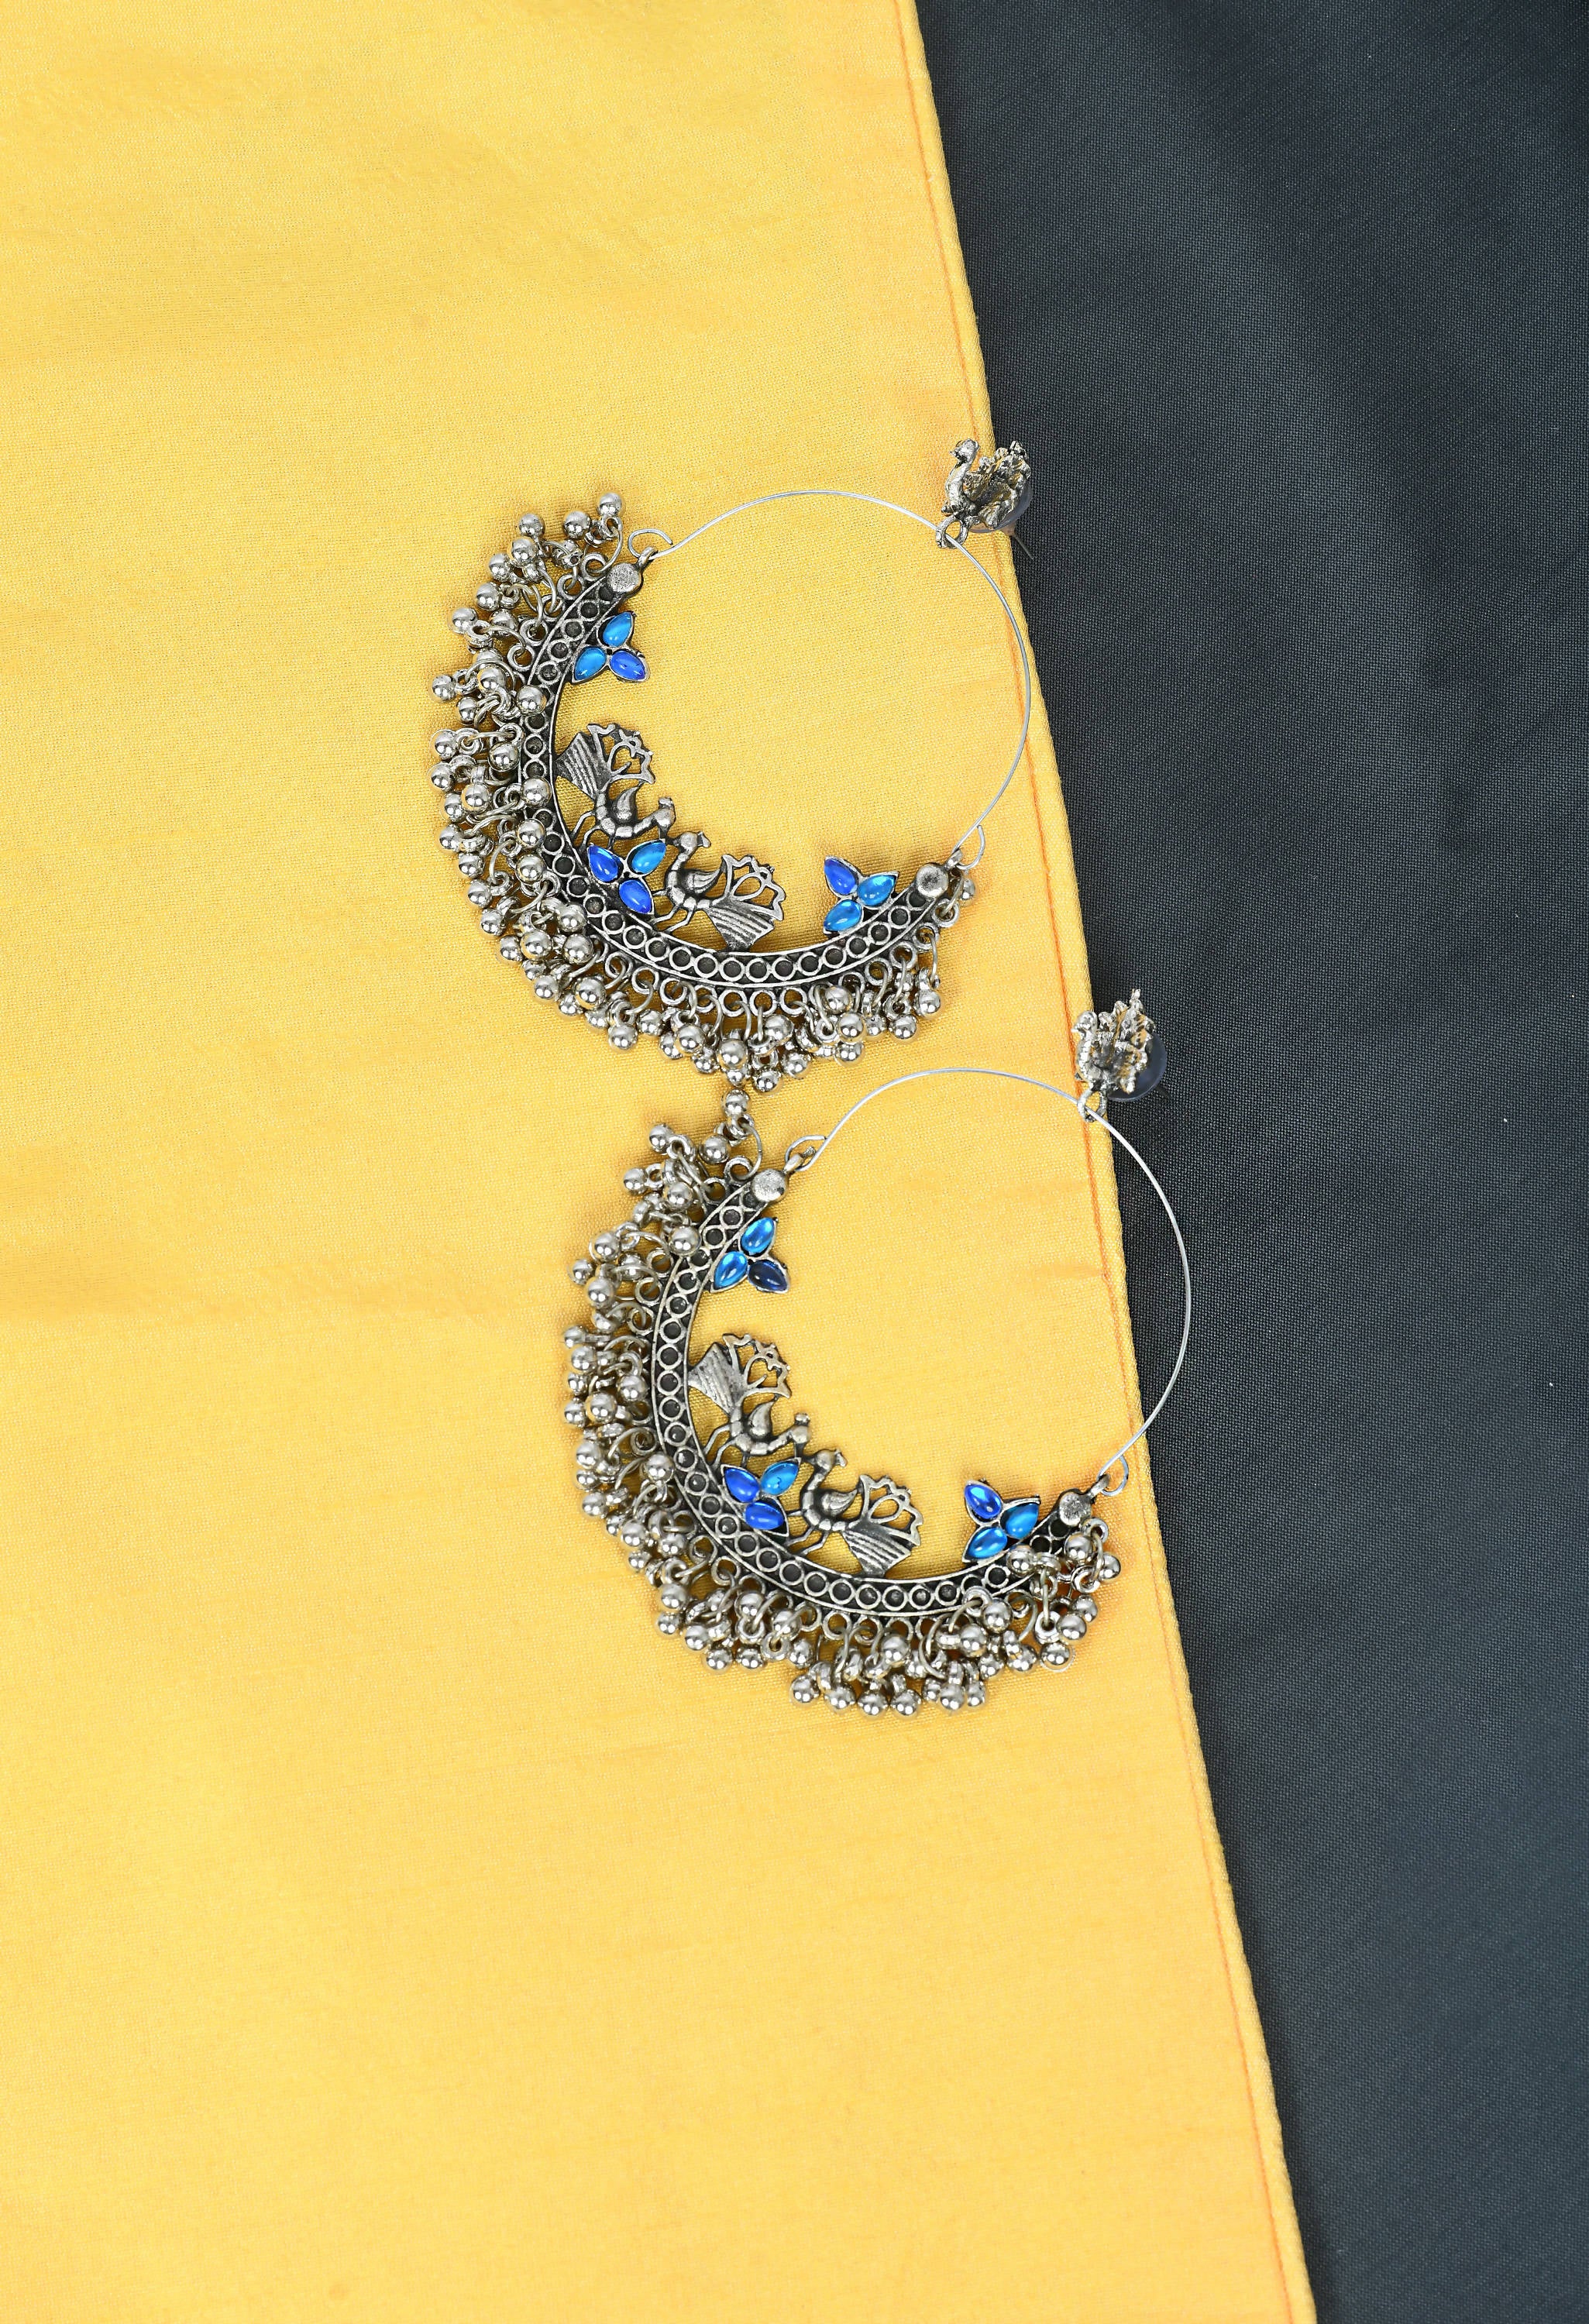 Trendia Peacock Chandbali Earrings by Kamal Johar (1 Pair earrings)